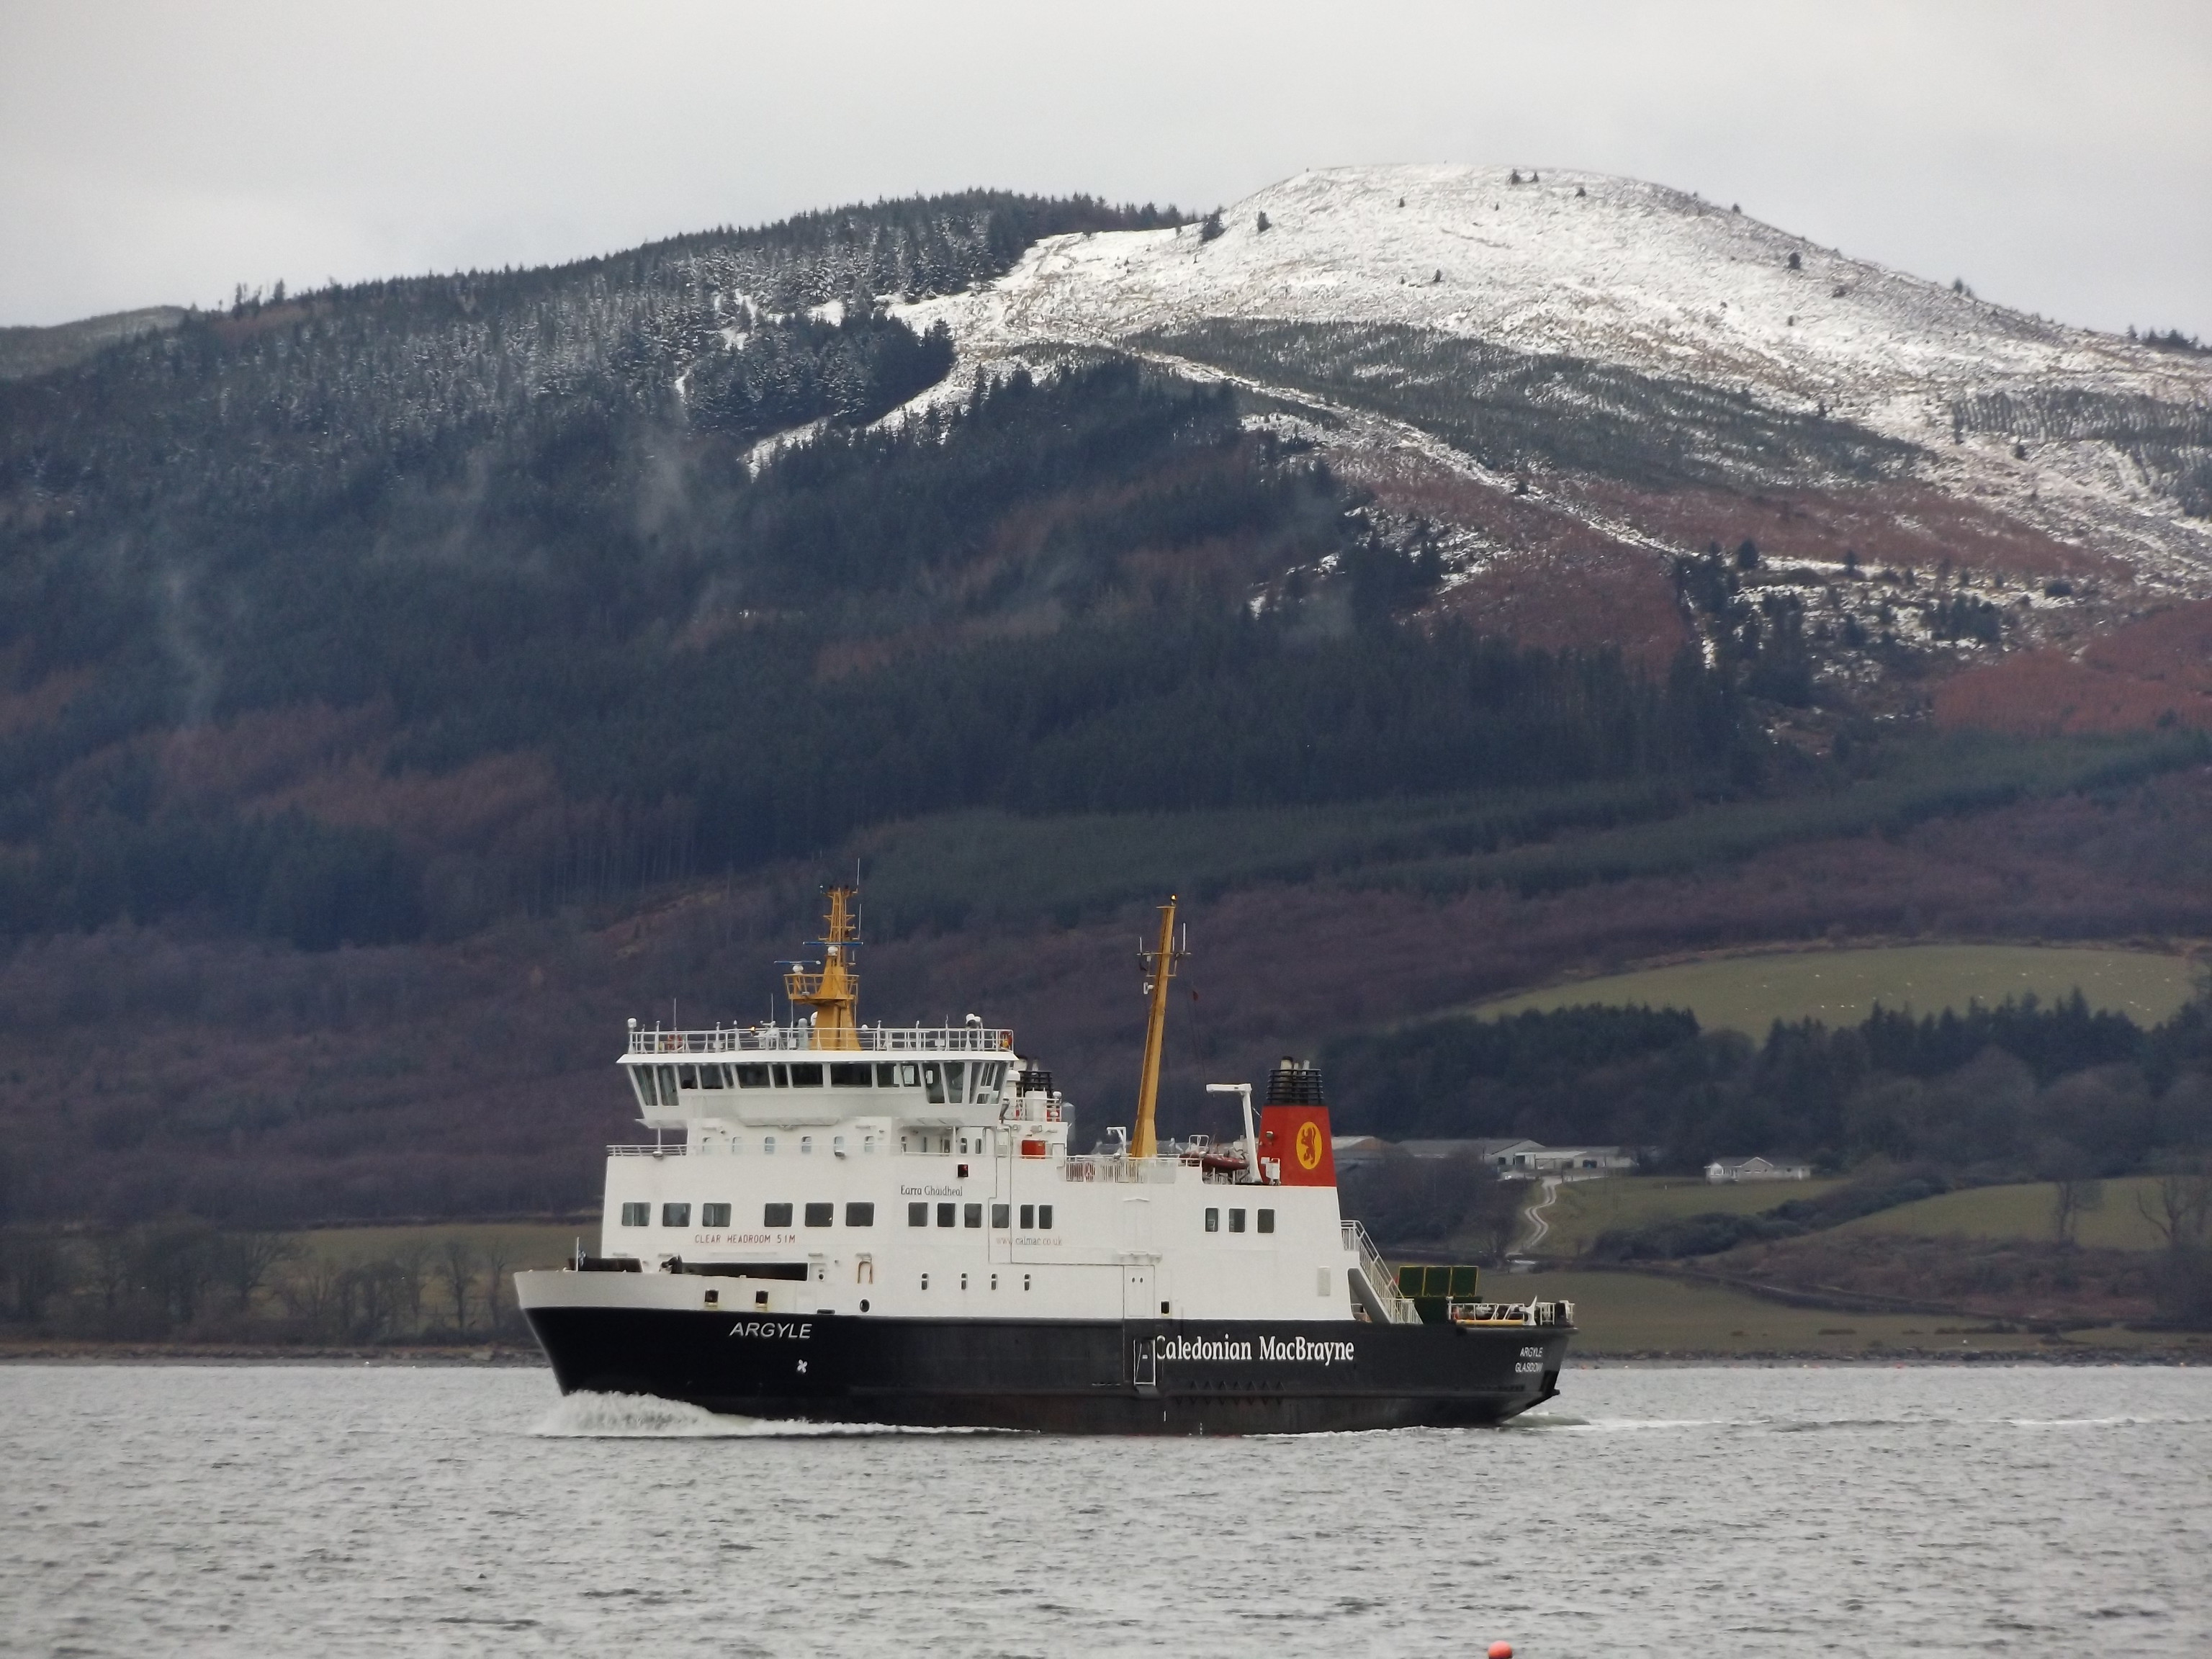 Calmac Ferry approaching Rothesay, Bute, Scotland, 4 April 2018